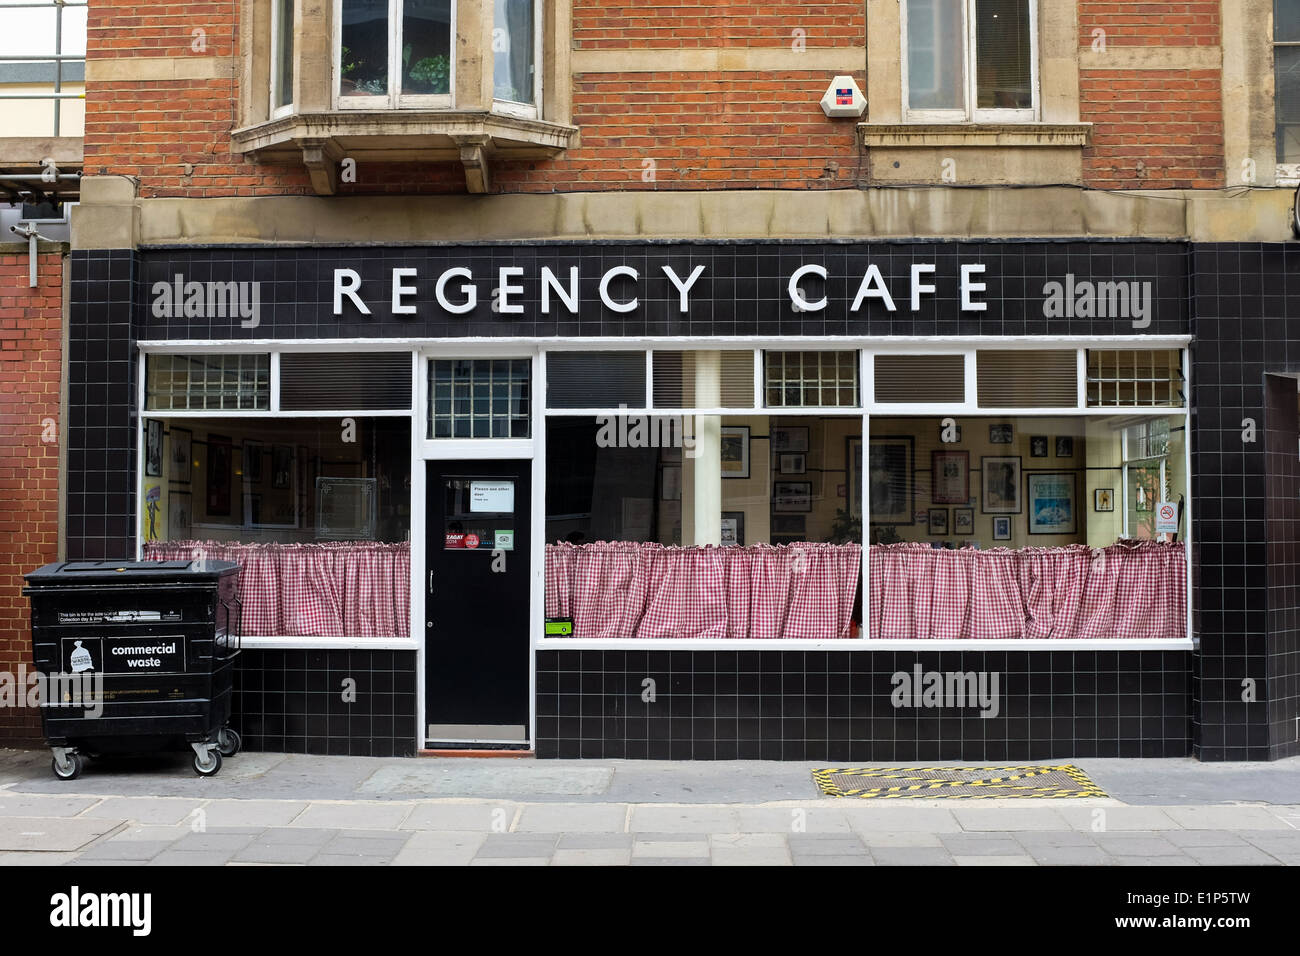 Exterior of the Regency Cafe on Regency Street in Victoria, London. UK. Stock Photo